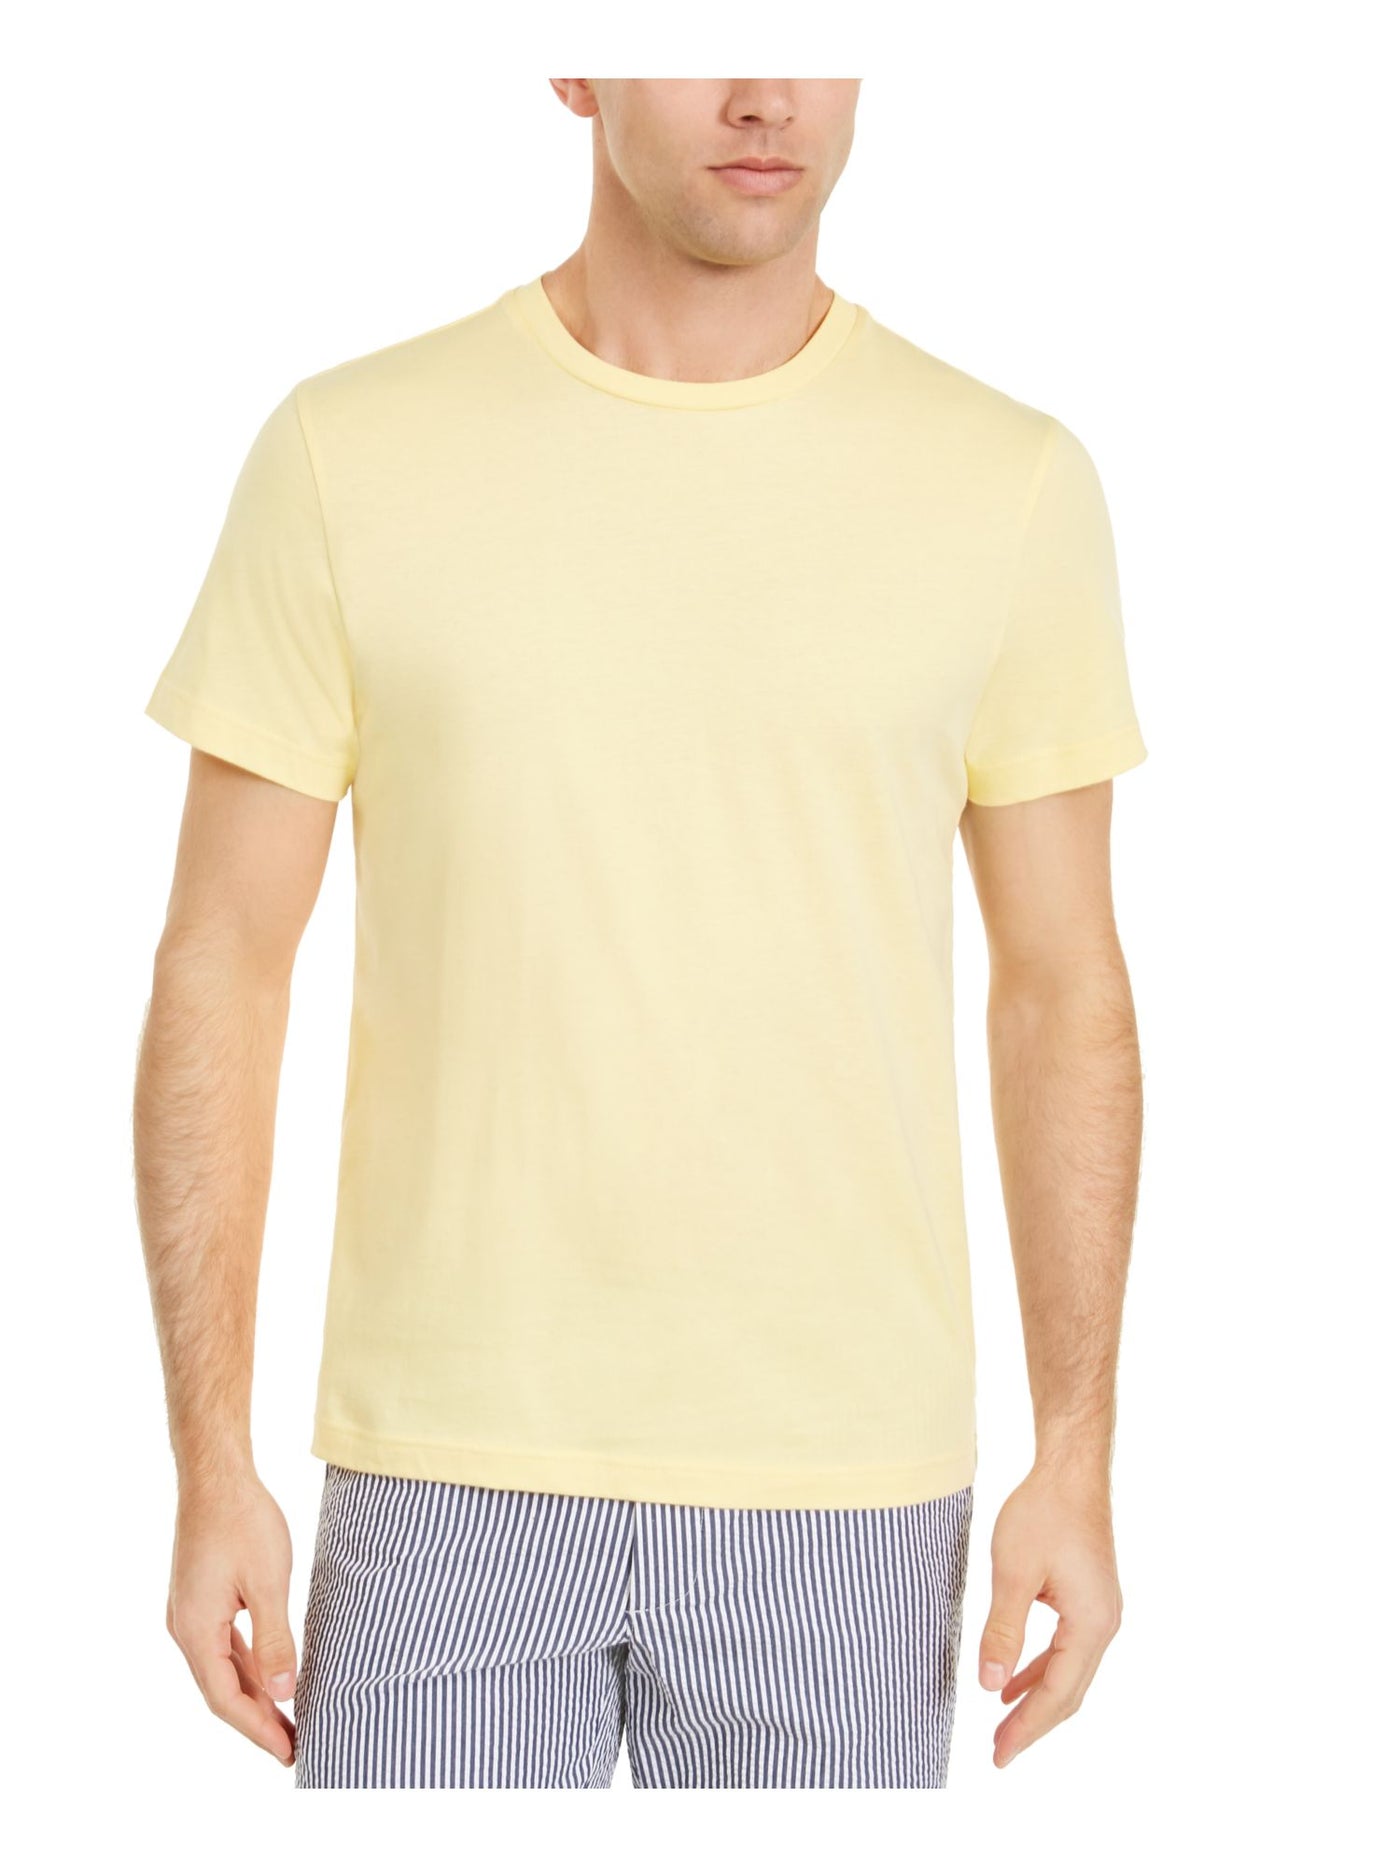 CLUBROOM Mens Yellow Classic Fit Moisture Wicking T-Shirt XXL